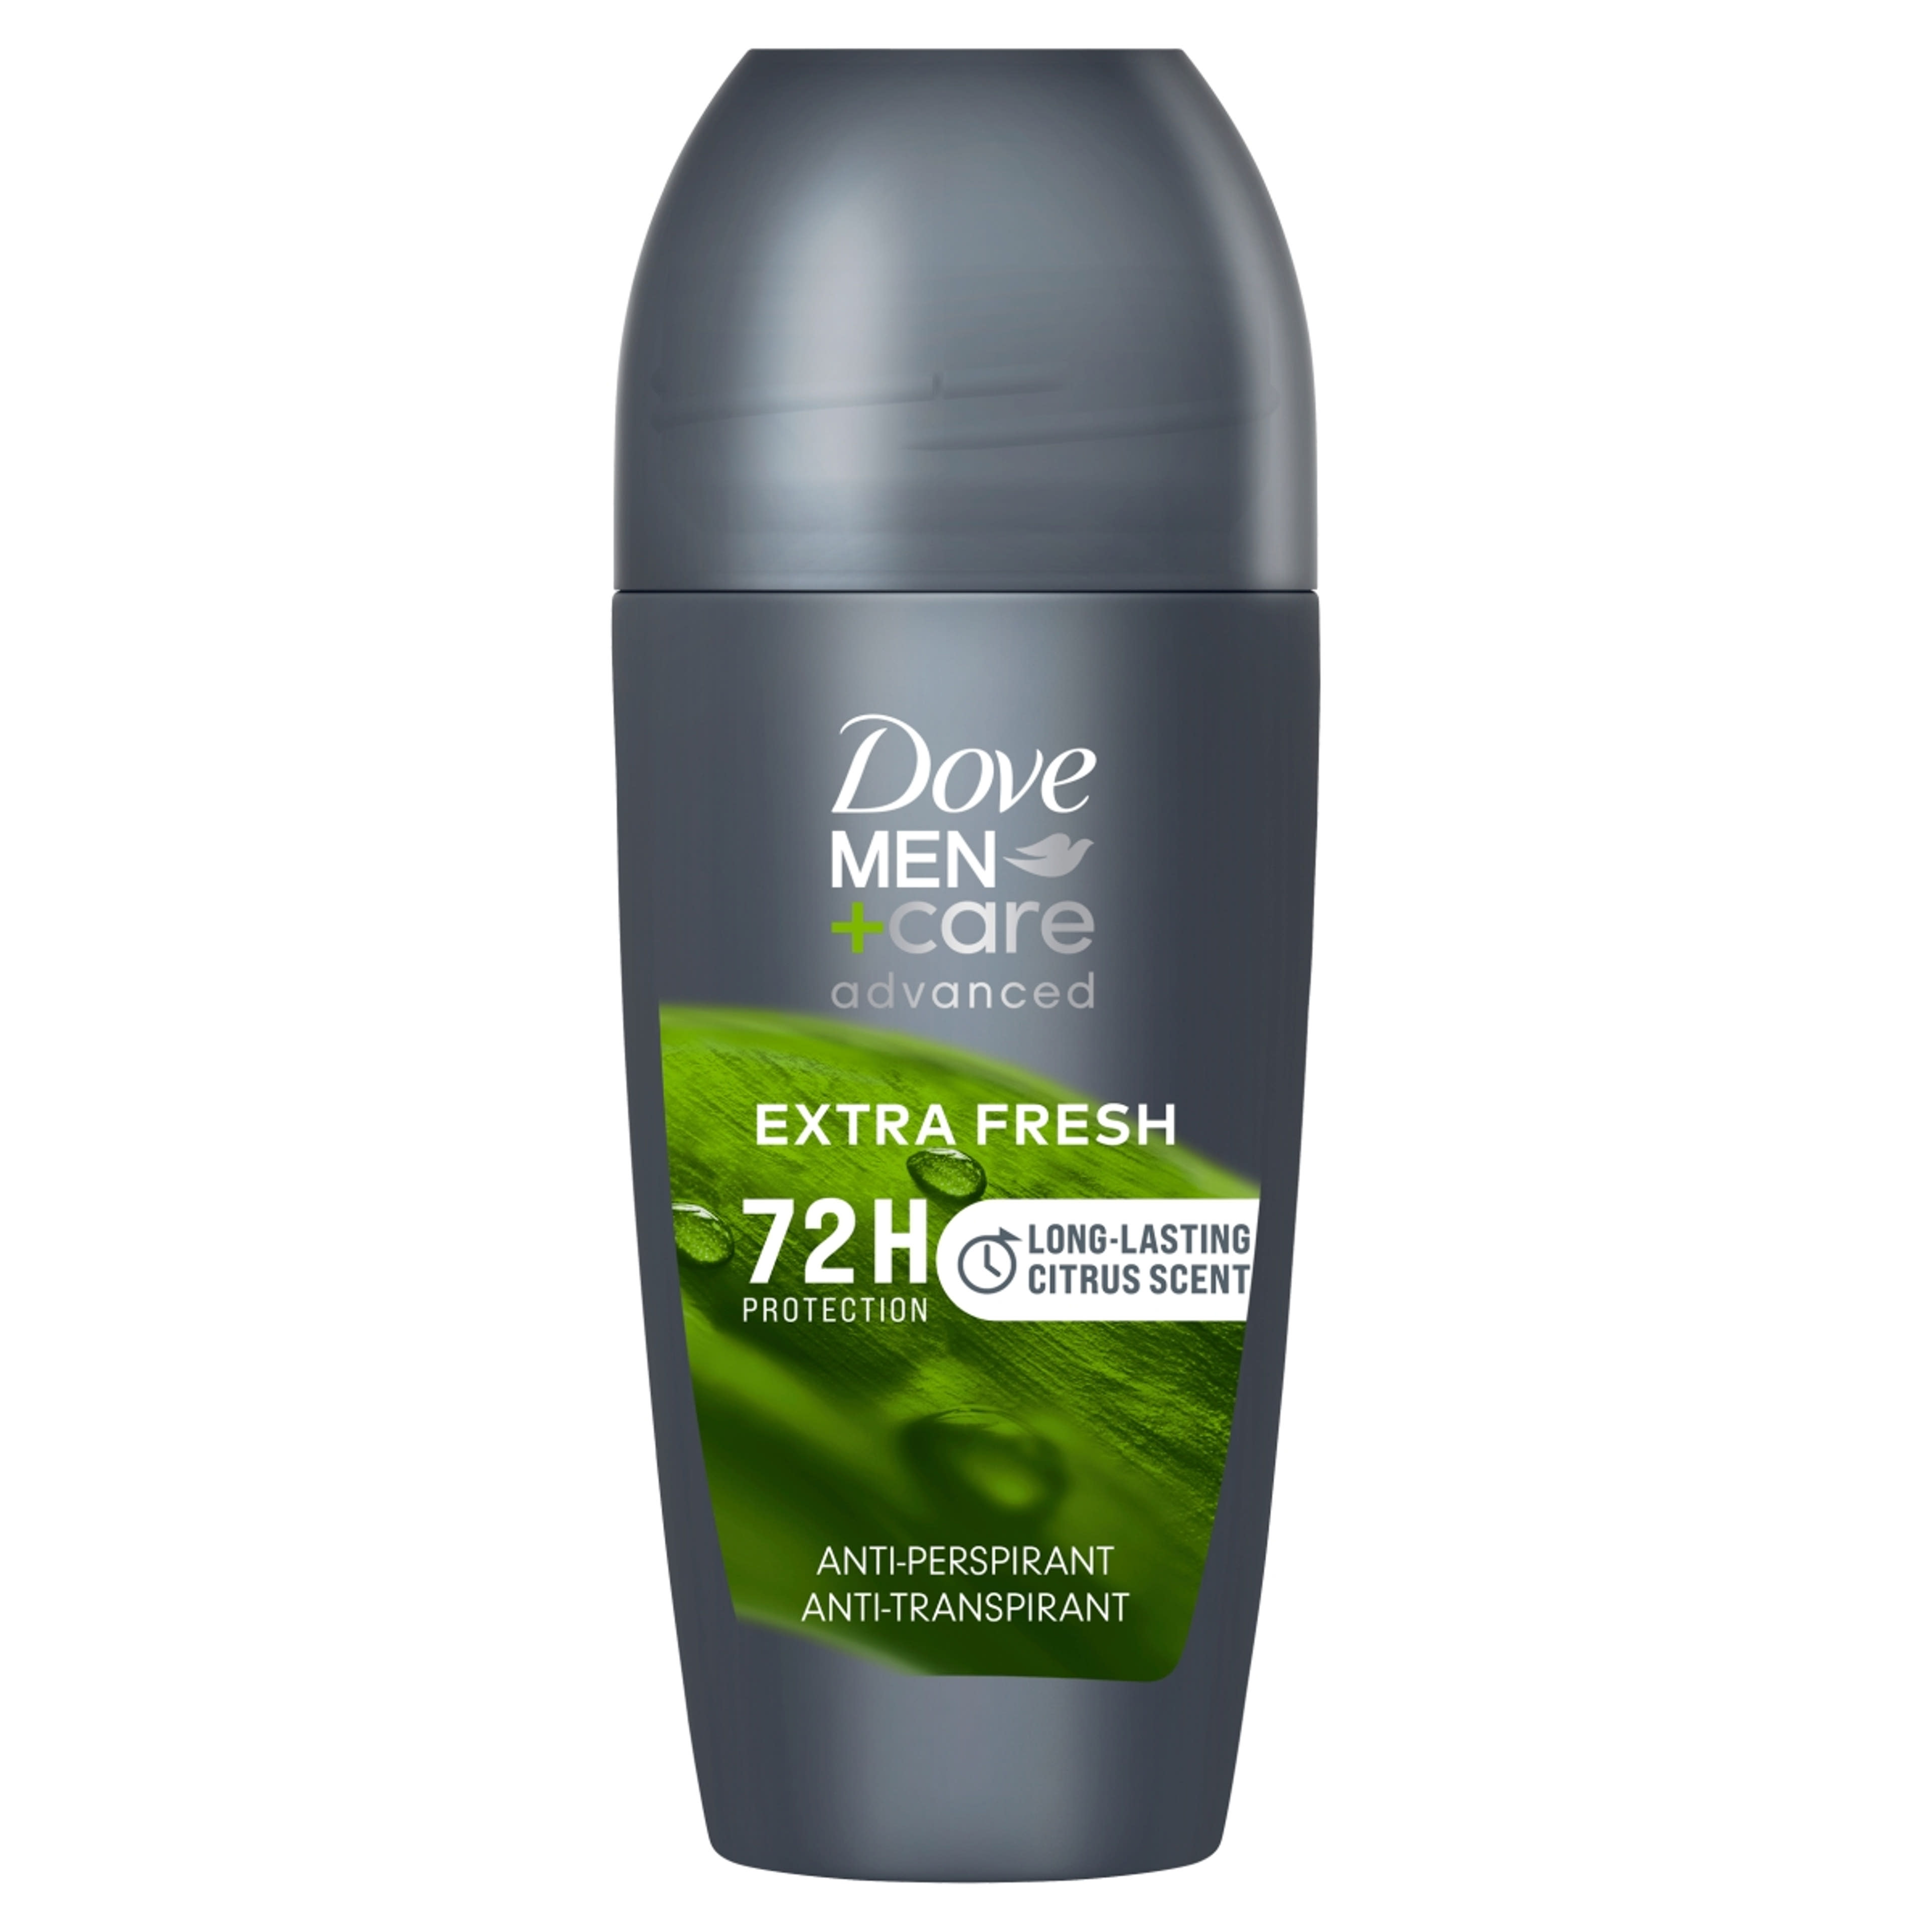 Dove Men+Care Extra Fresh roll - on - 50 ml